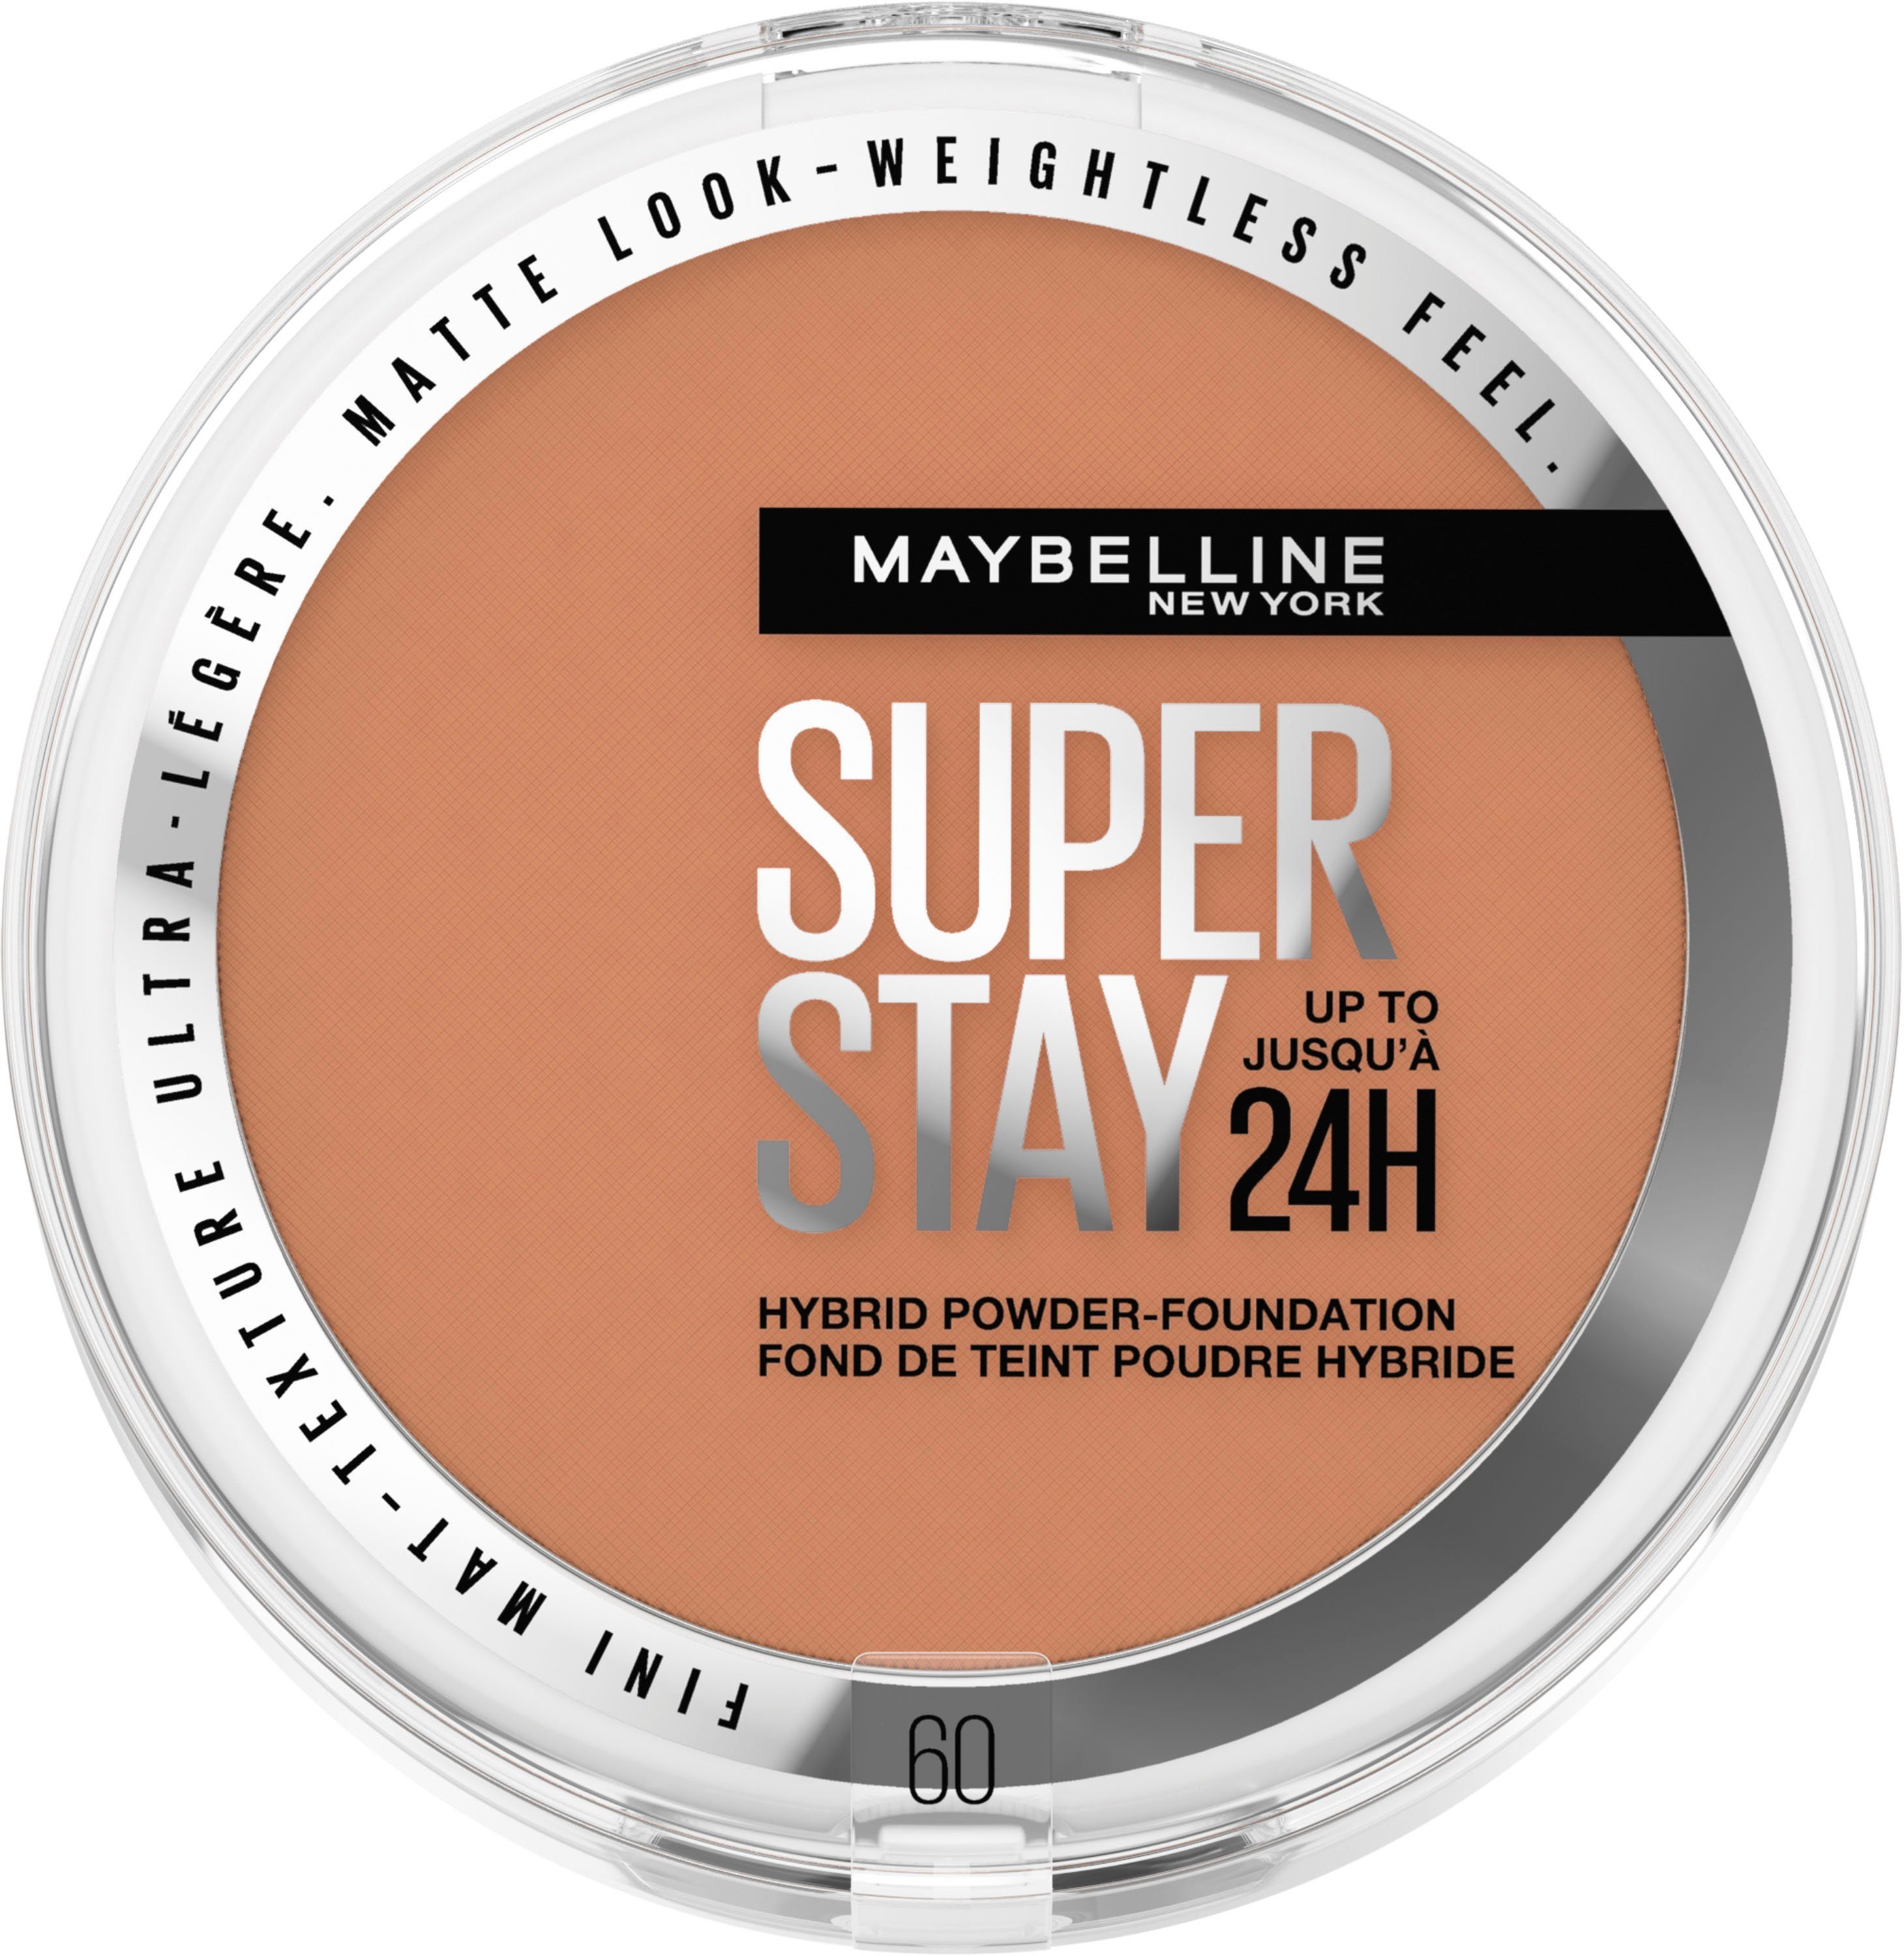 Make-Up YORK Super Foundation New Puder Maybelline NEW Hybrides Stay York MAYBELLINE